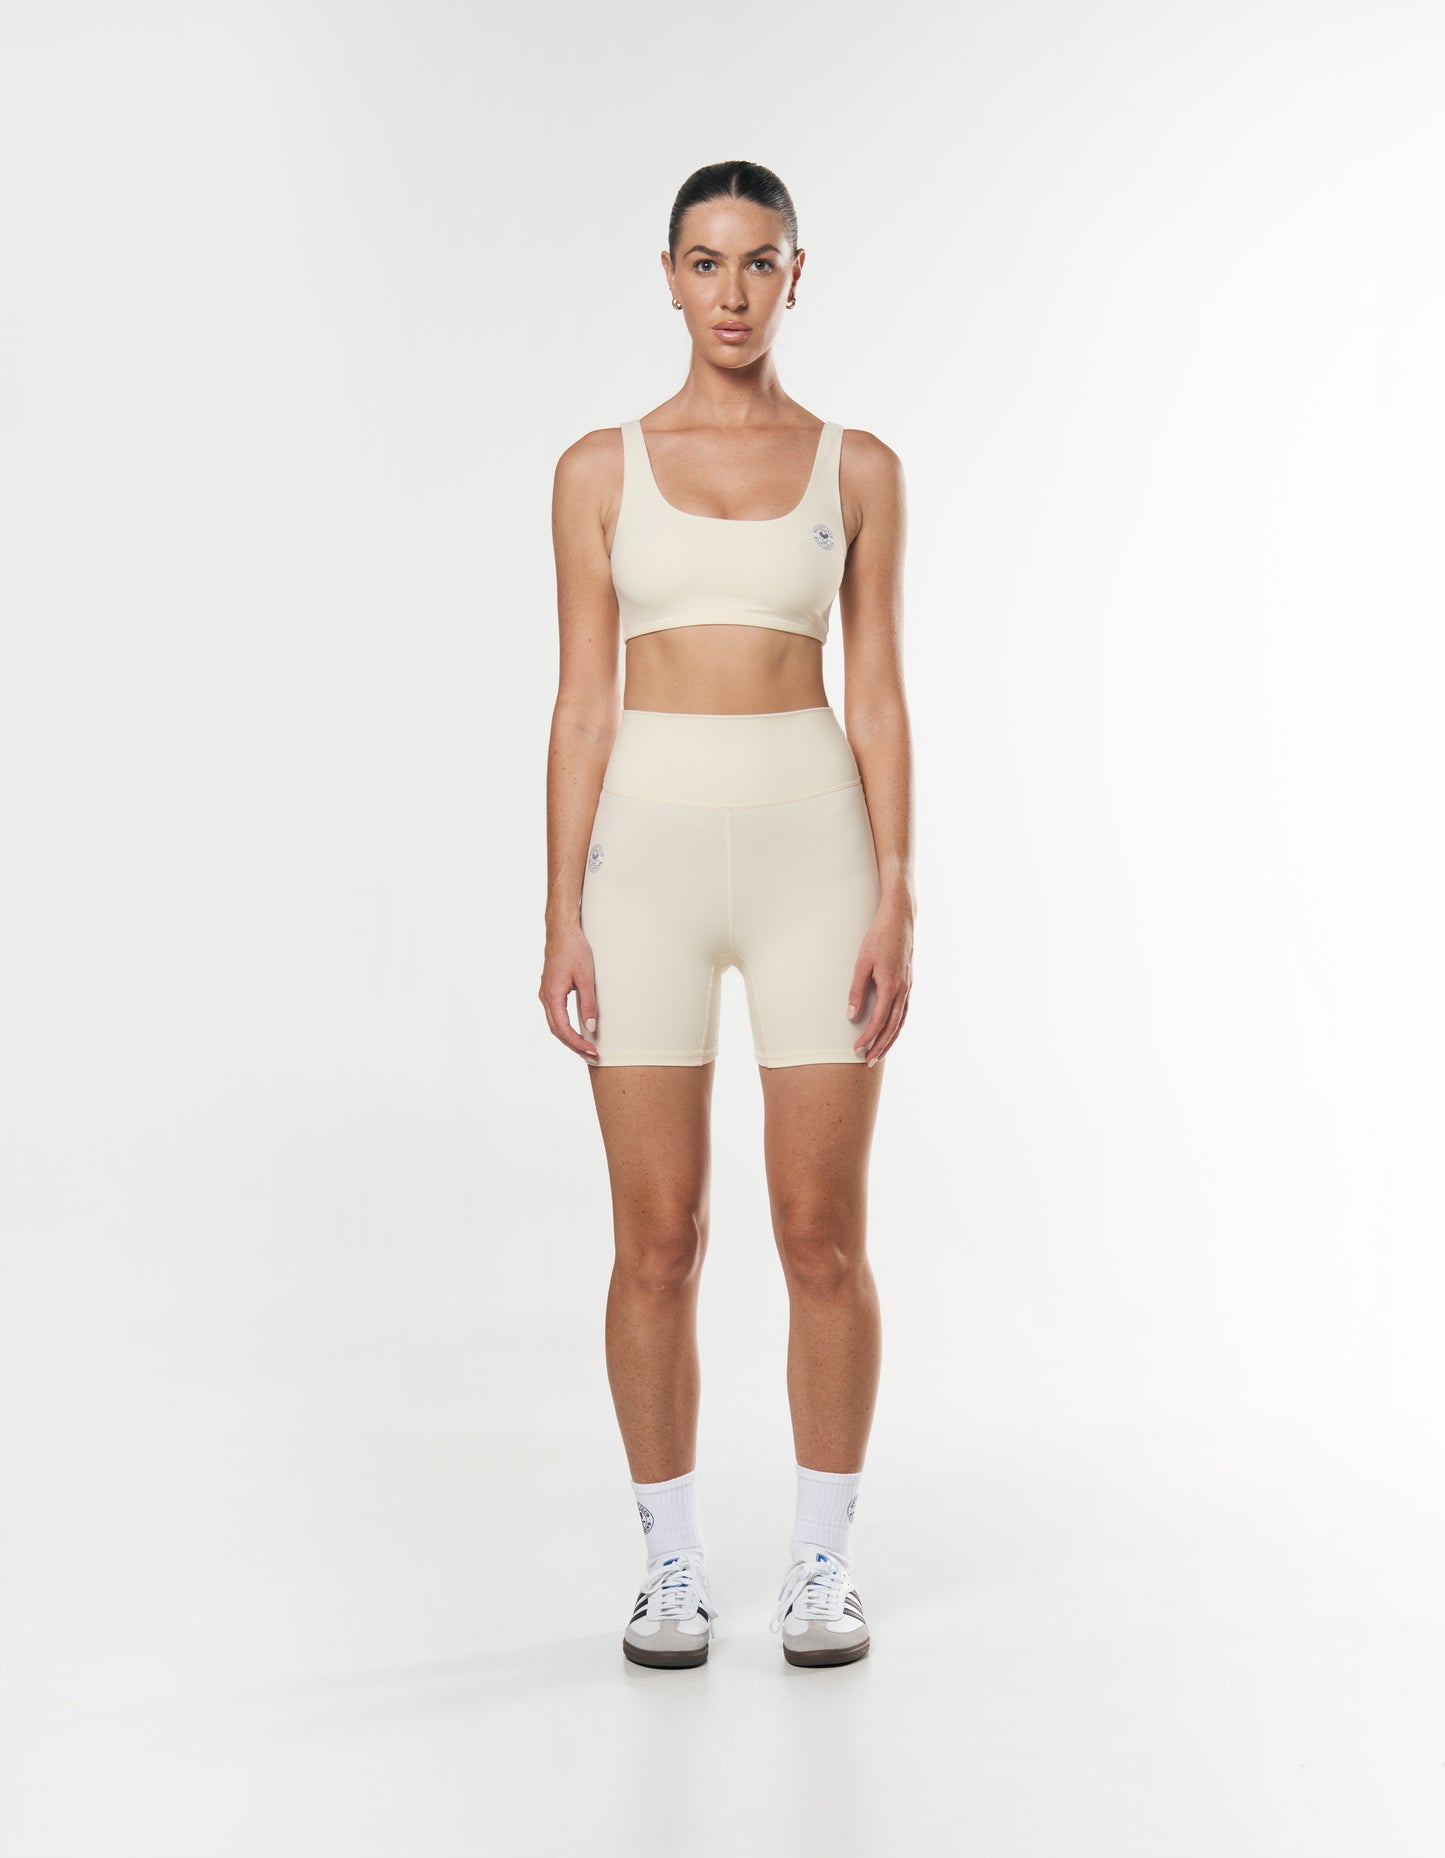 Racquet Club Midi Bike Shorts - Cream